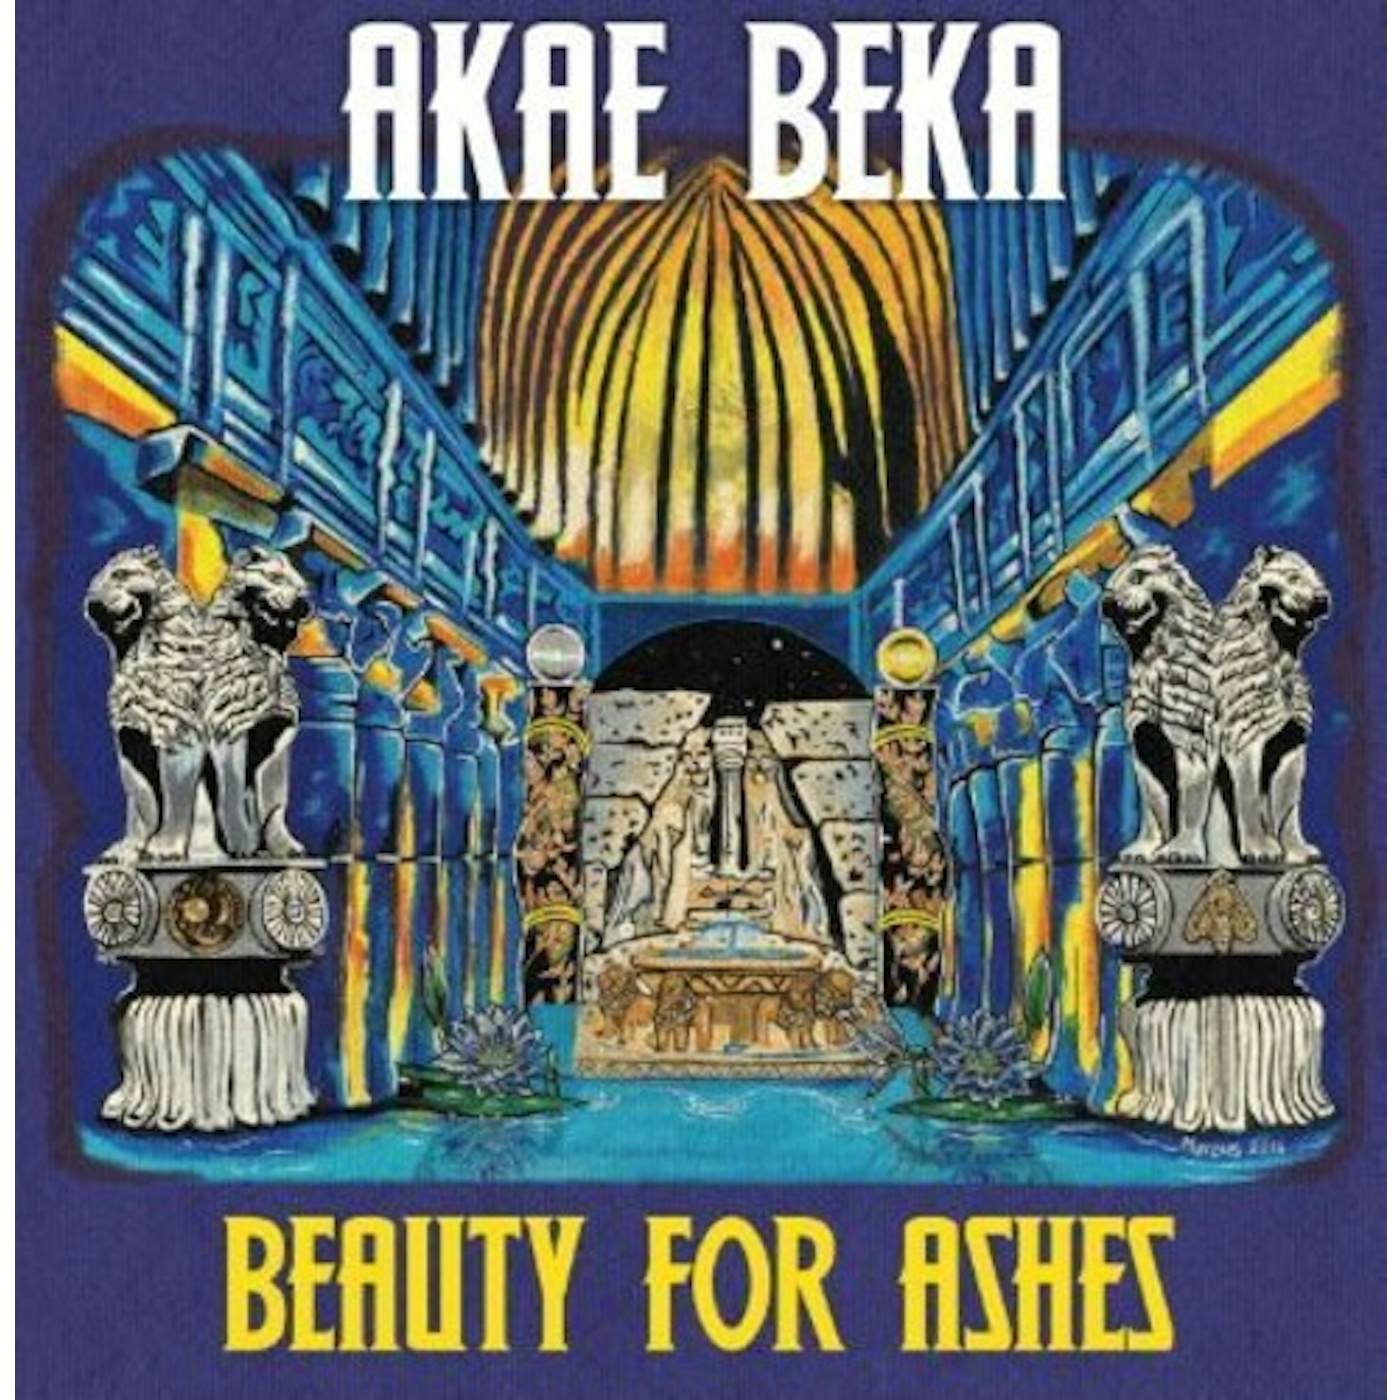 Akae Beka BEAUTY FOR ASHES Vinyl Record